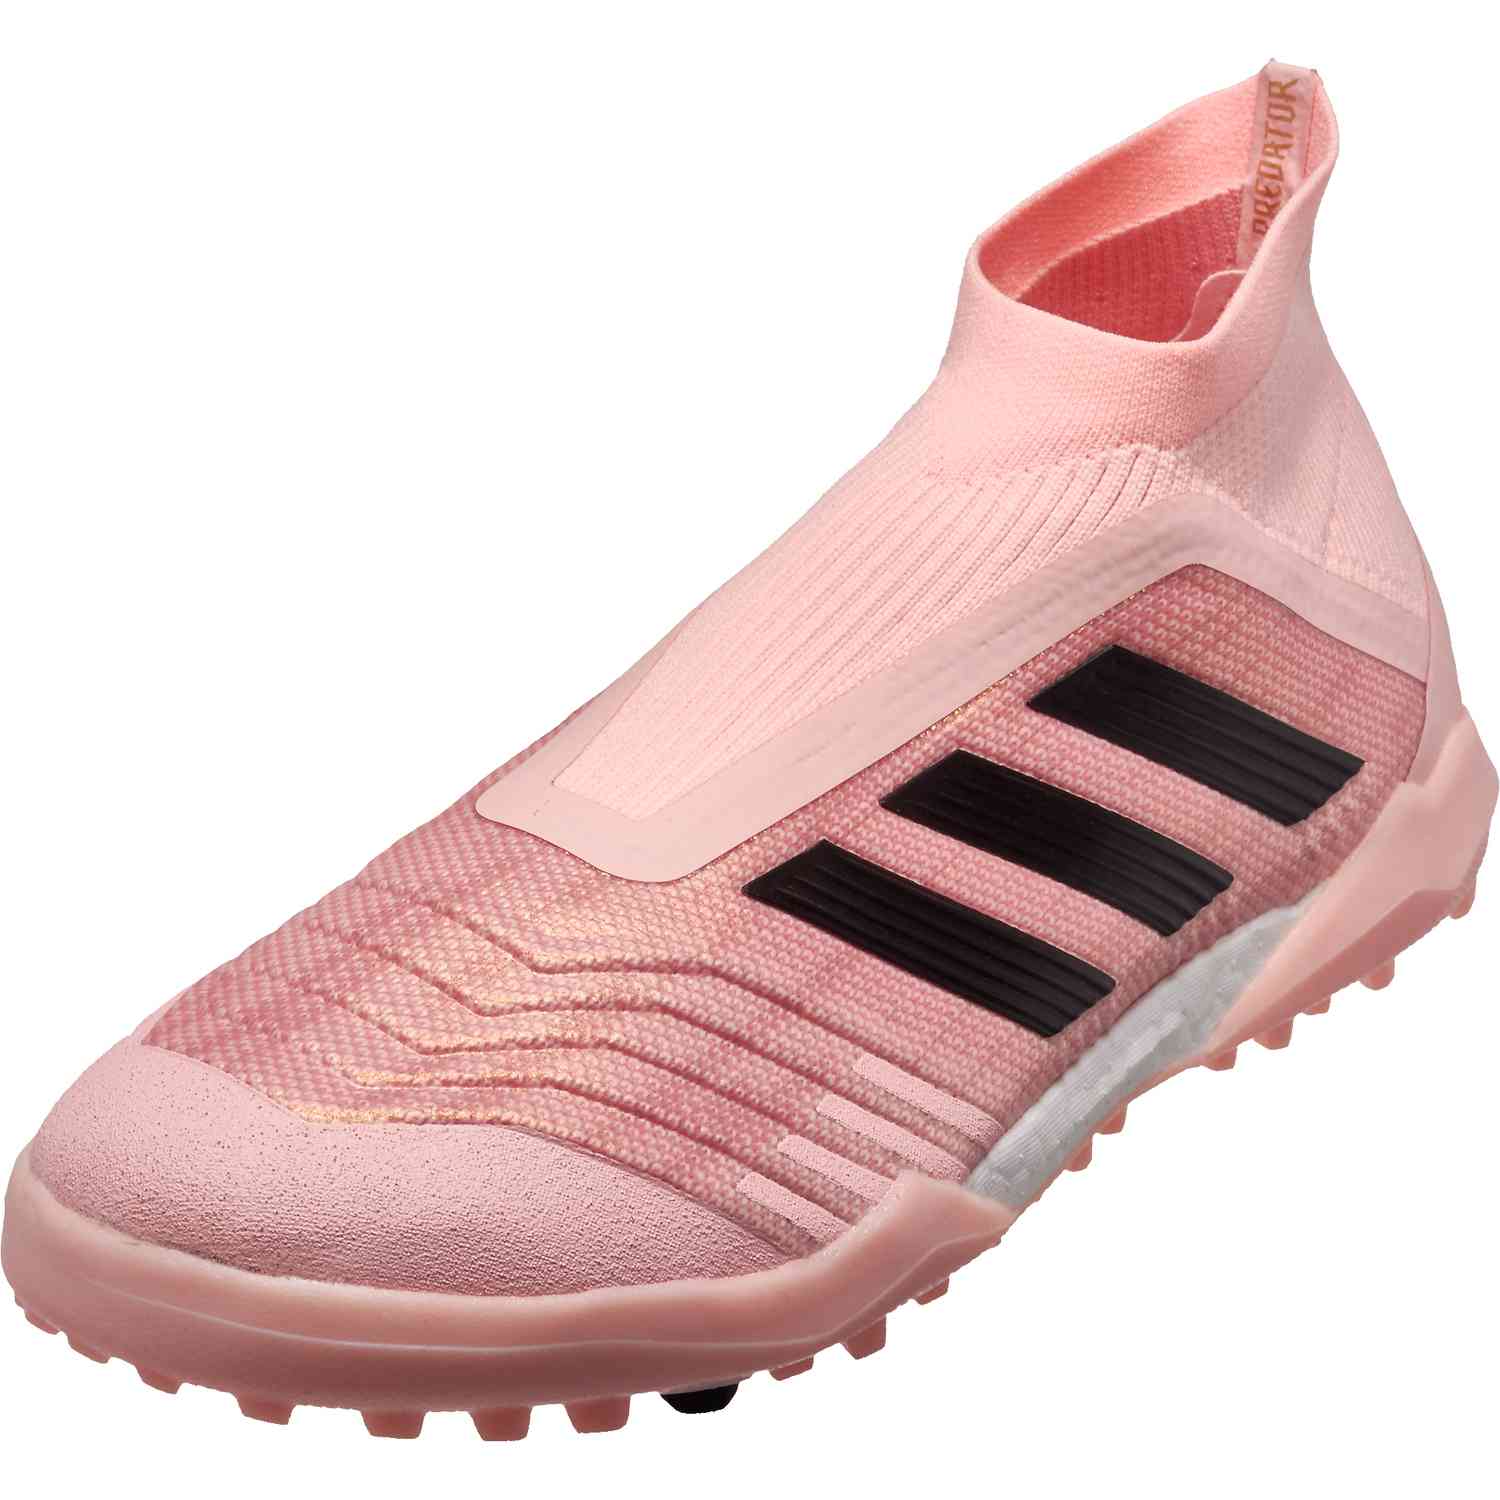 adidas predator pink indoor